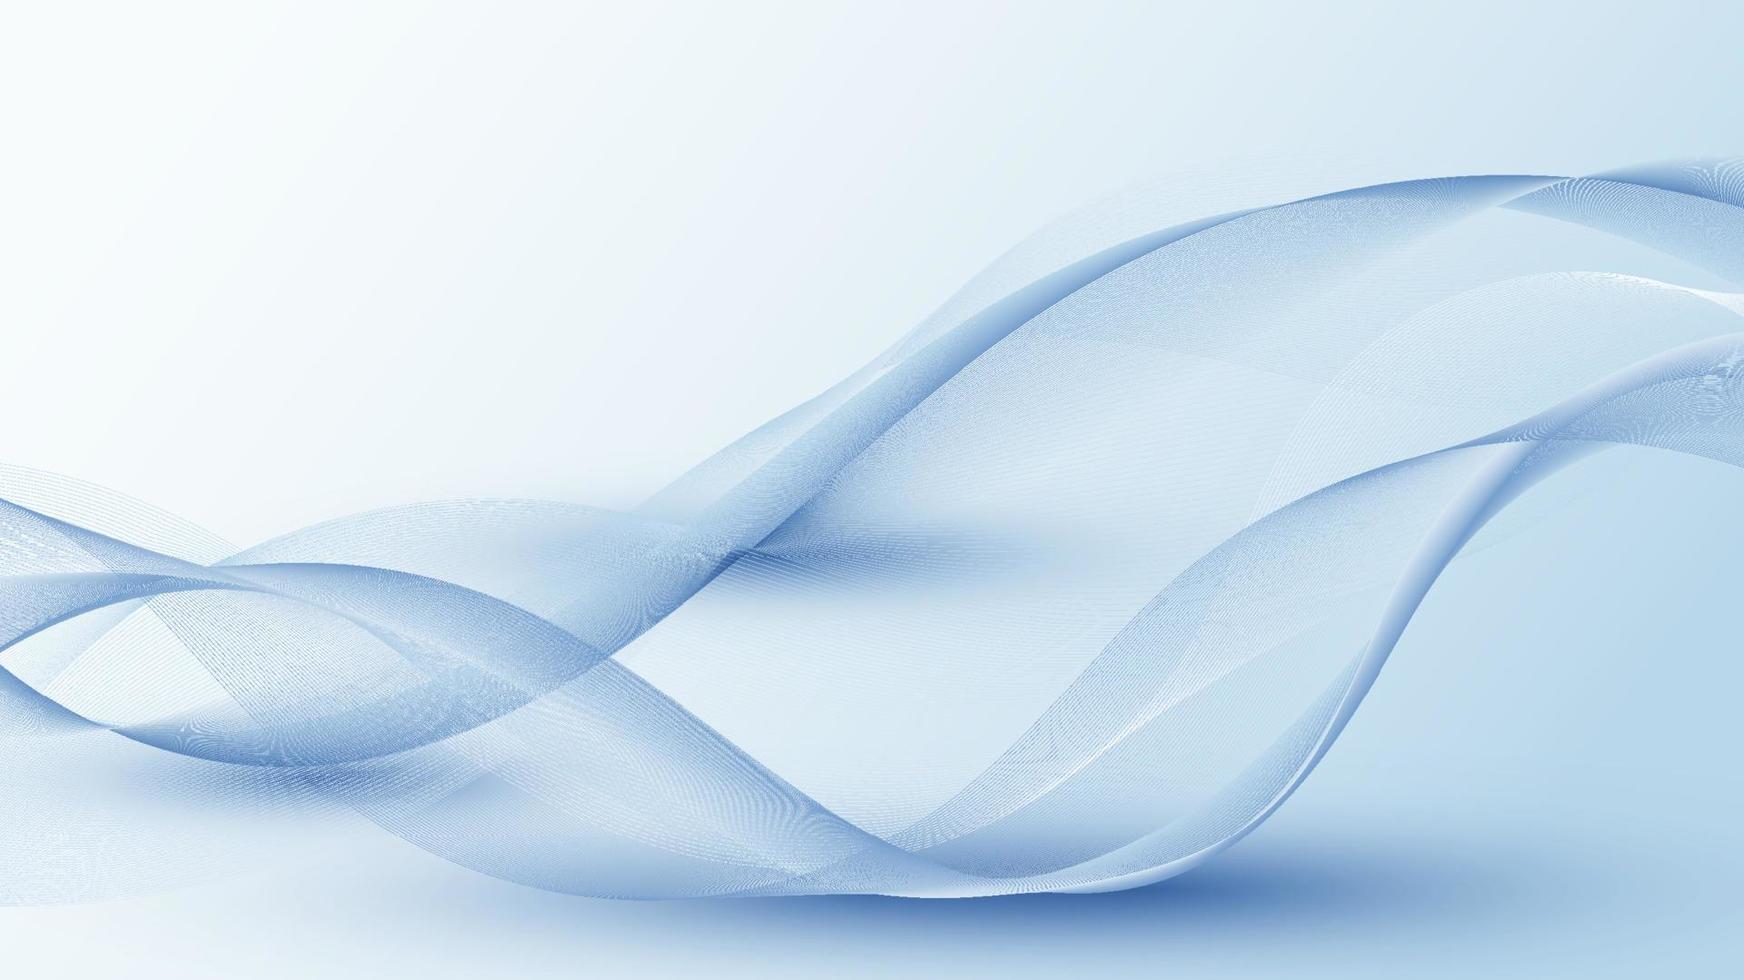 abstract 3d blauw dynamisch golfstroomlijnenpatroon op witte achtergrond vector